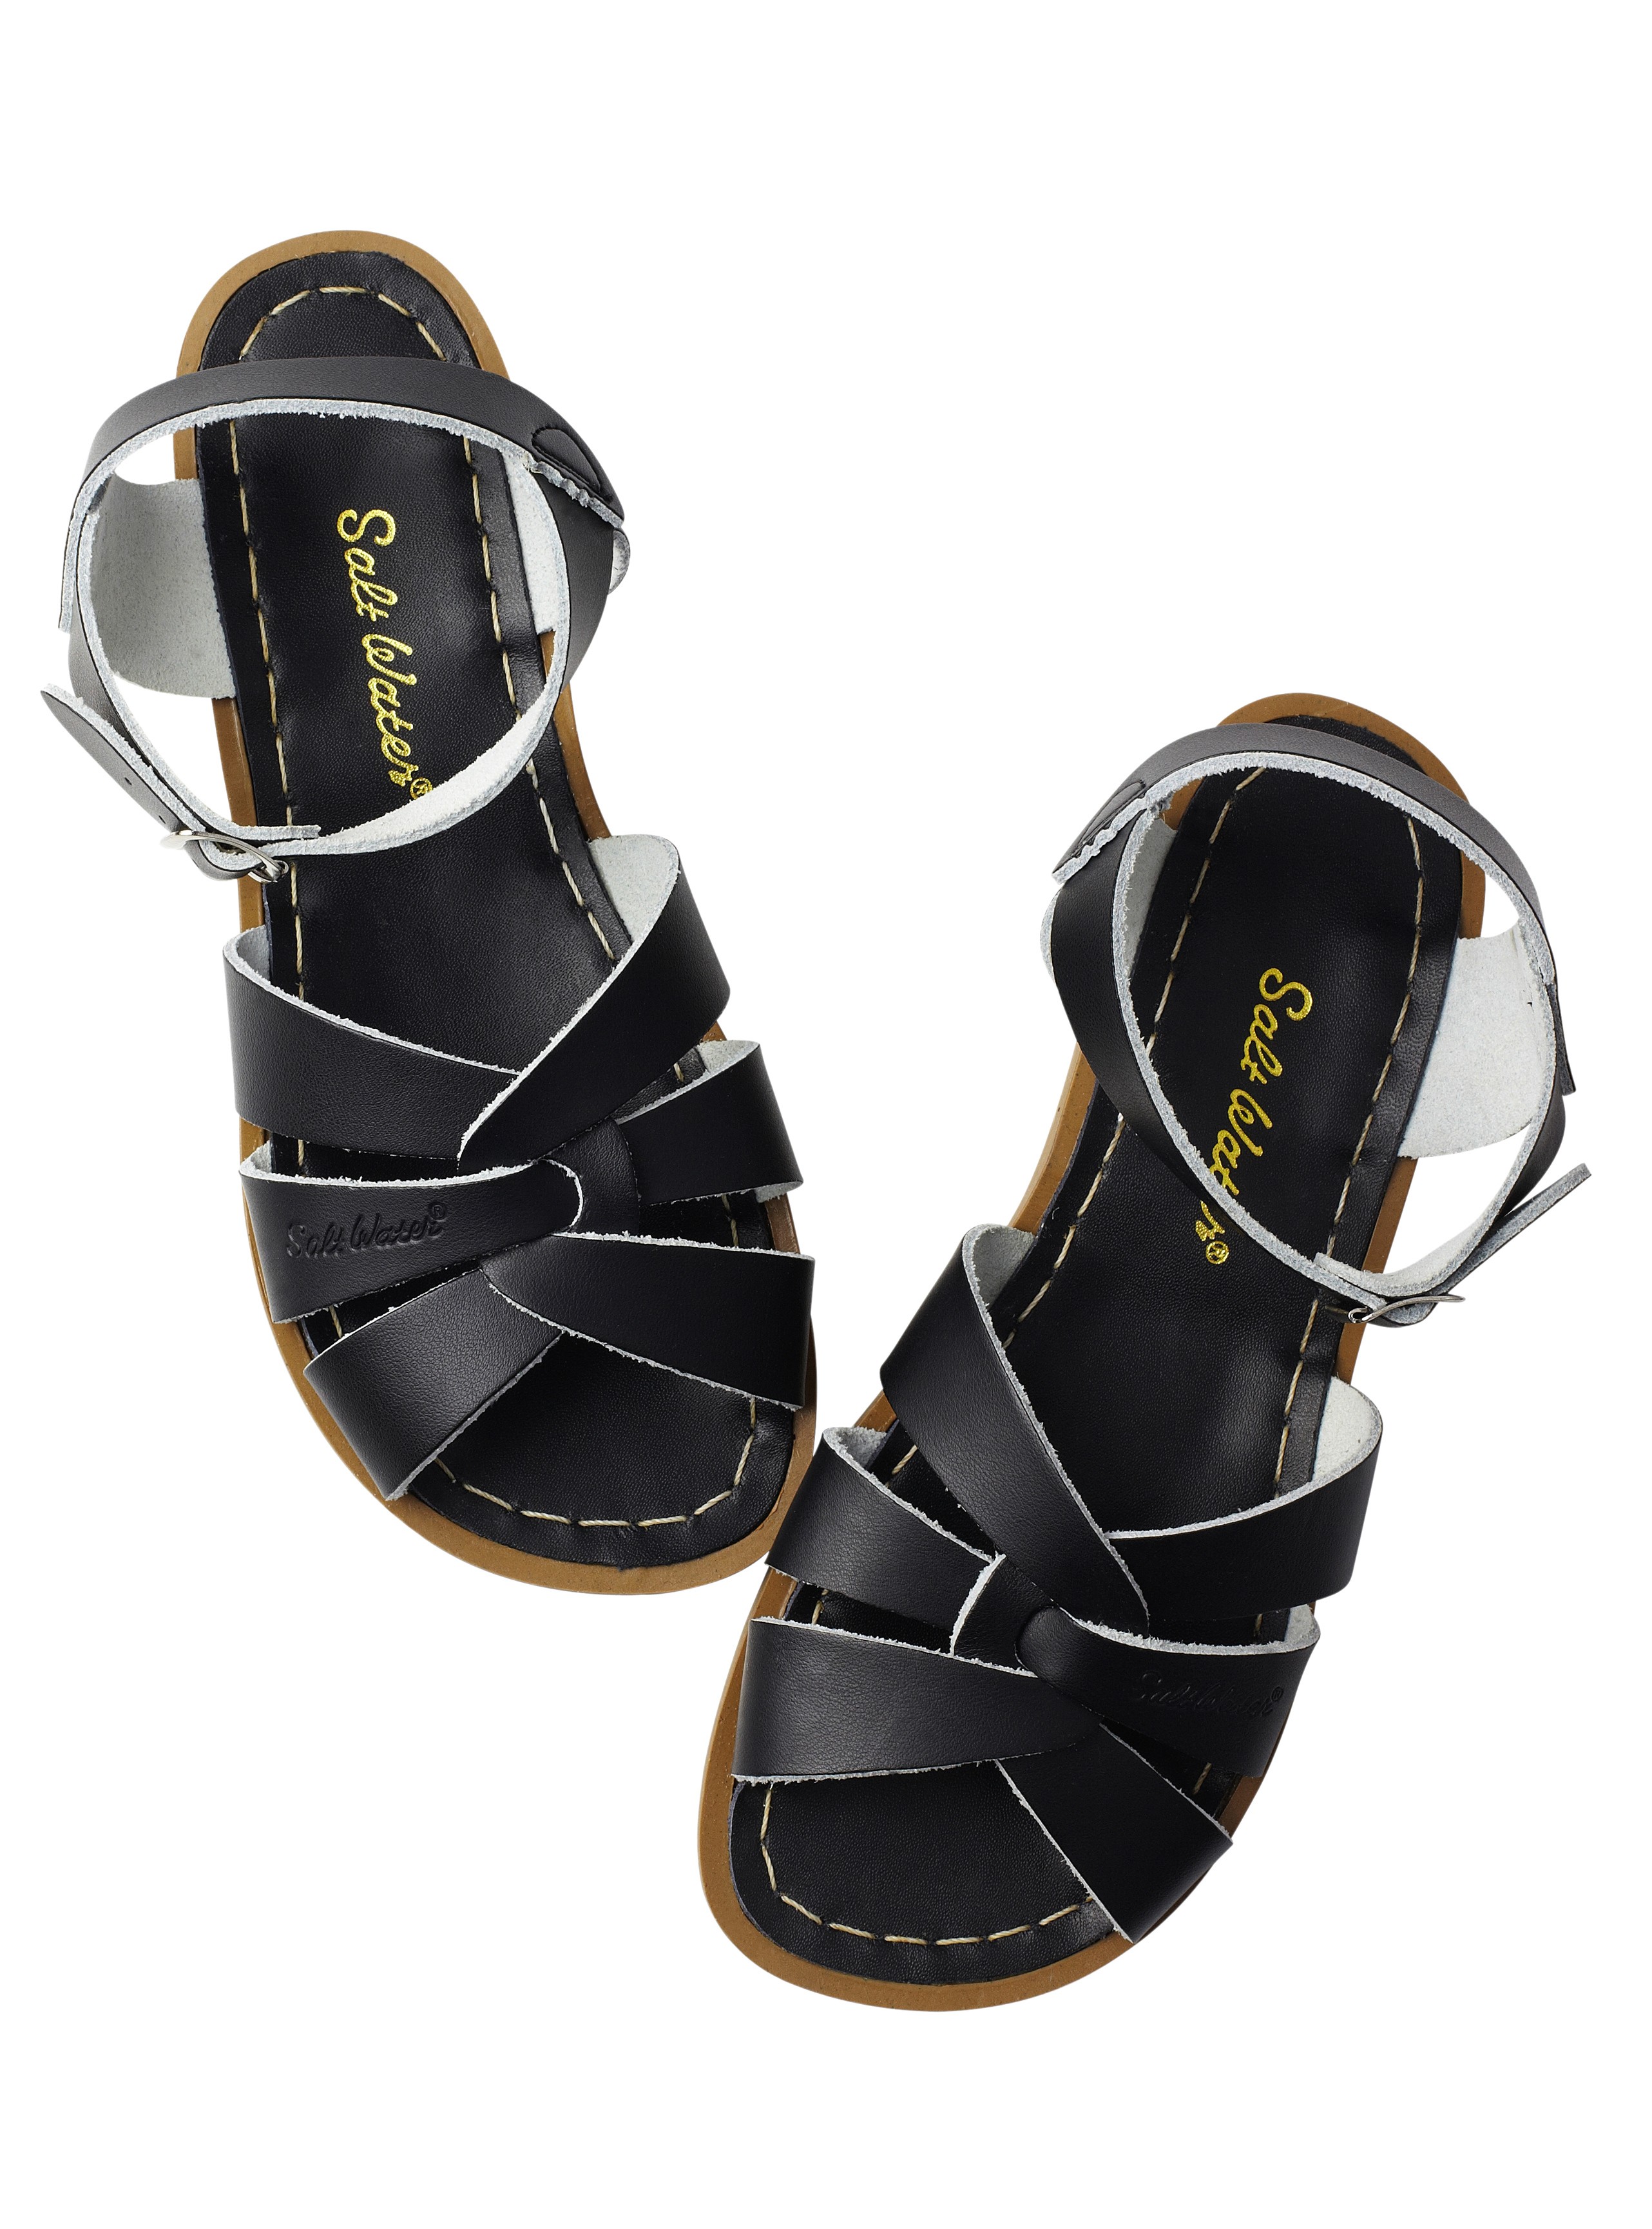 Salt-Water Original sandals black, child - Salt-Water Sandals - SHOES ...